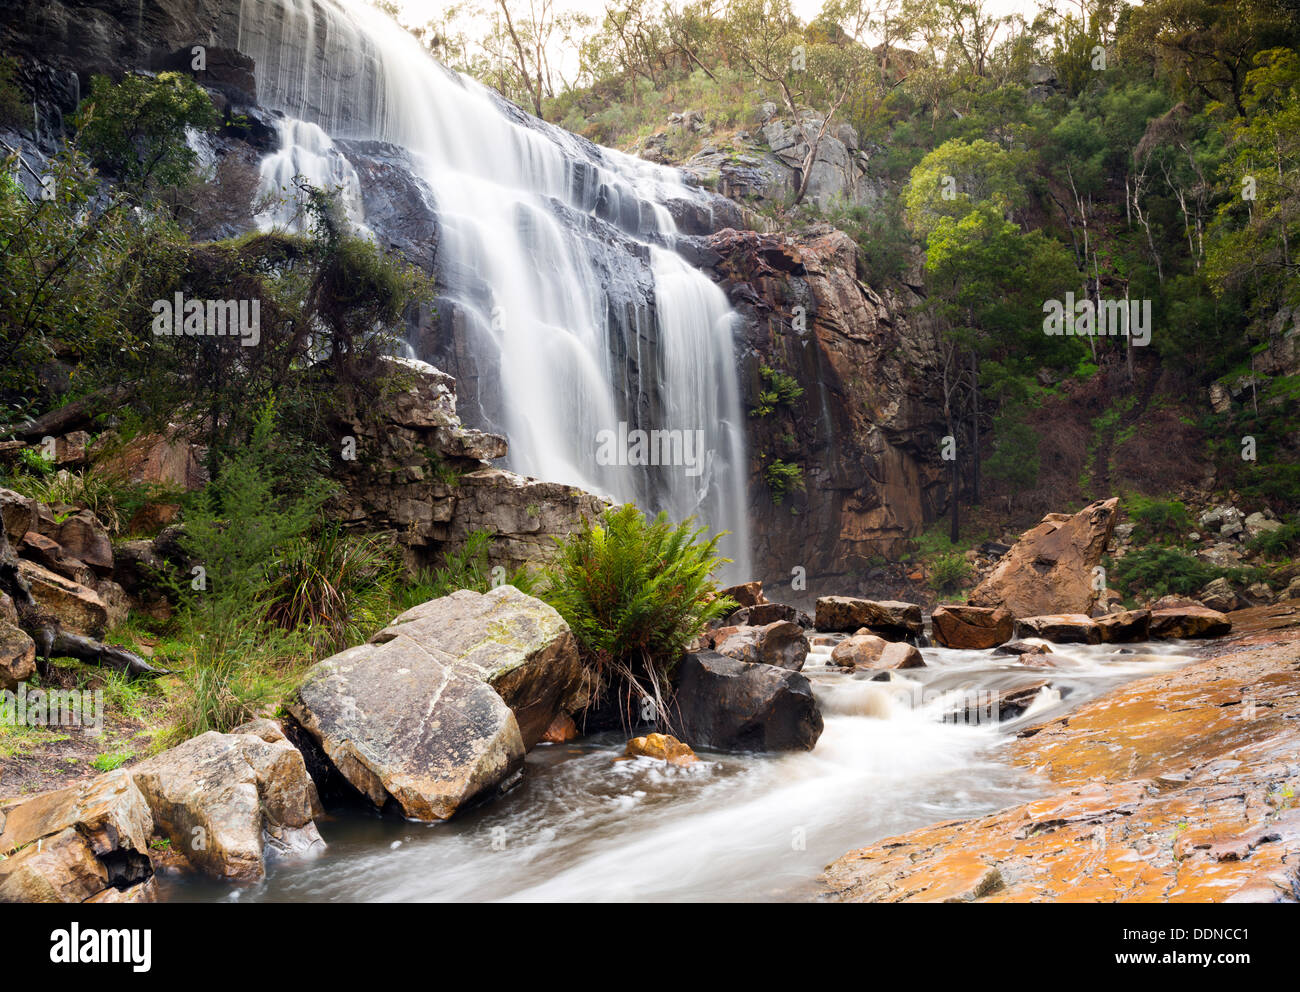 MacKenzie Falls waterfall in the Grampians region of Victoria, Australia Stock Photo